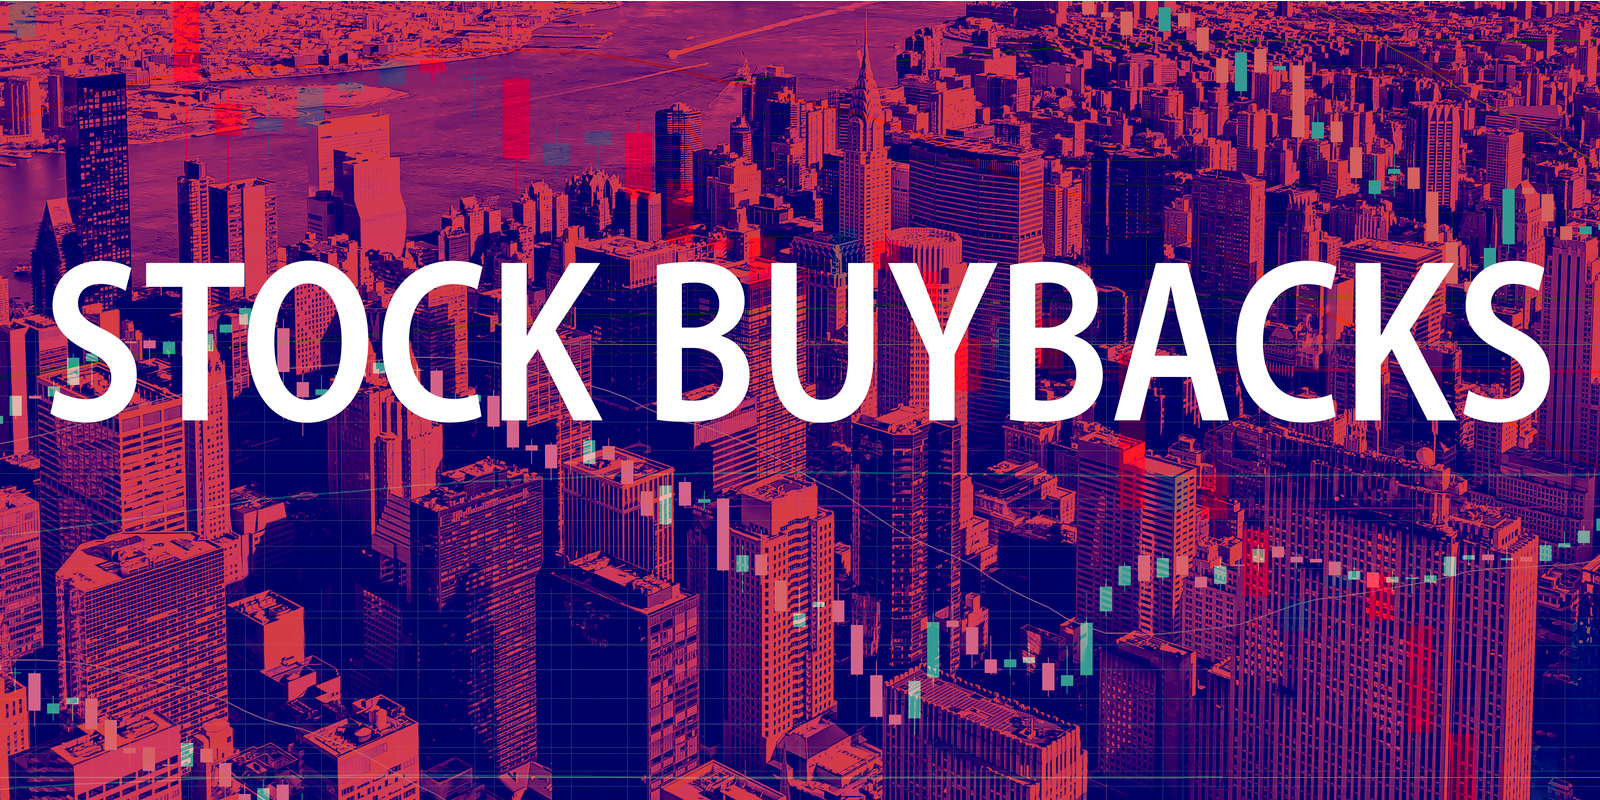 Stock Buybacks theme with Manhattan New York City skyscrapers